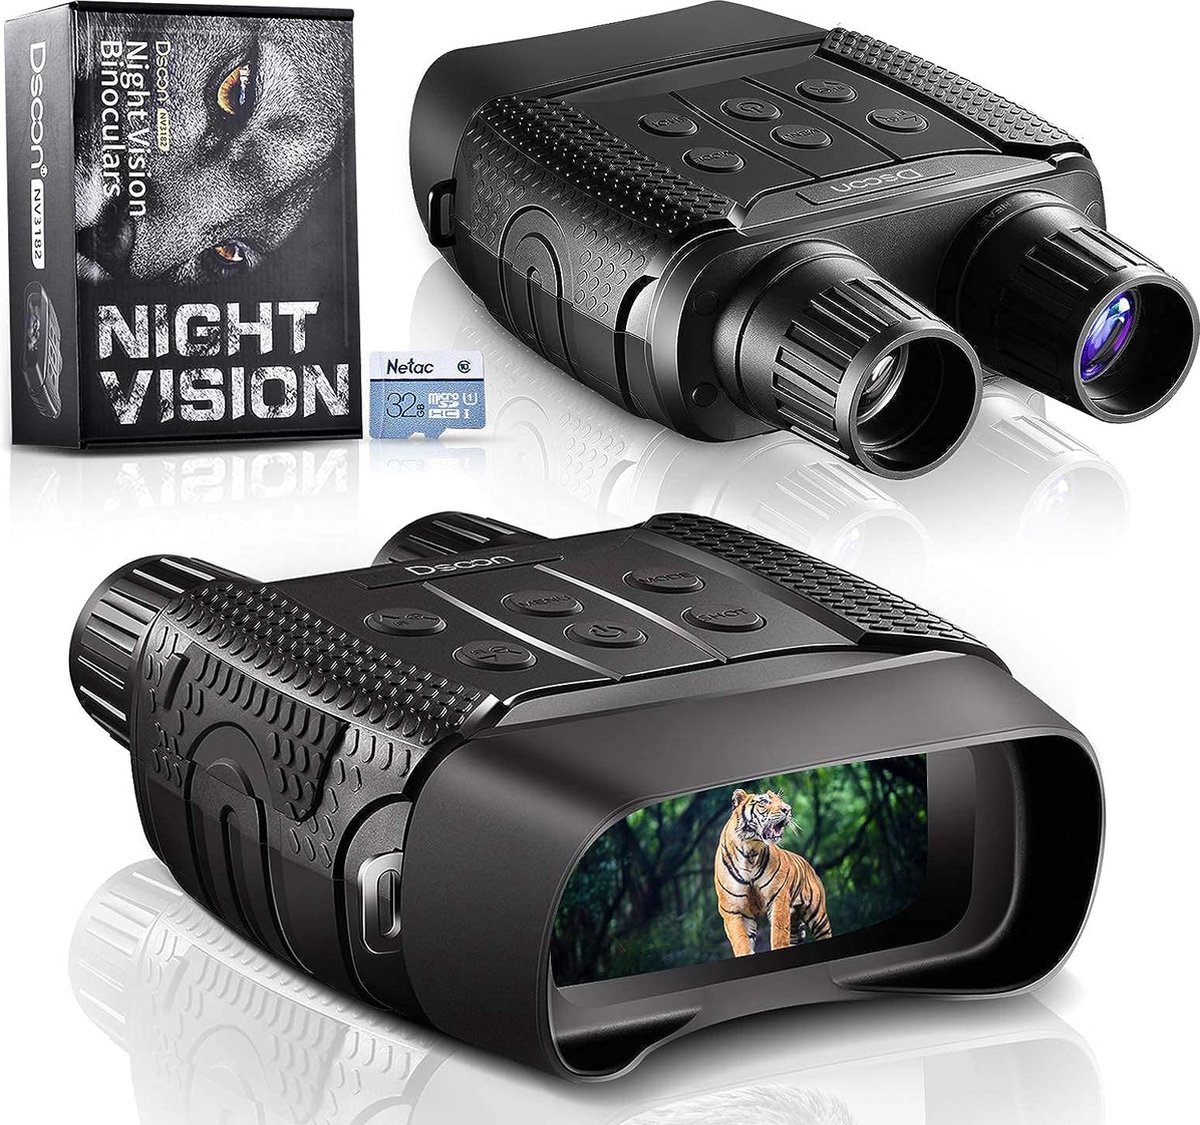 Dsoon - Nv3182 - Night Vision - Verrekijker - Digitale Infrarood Camera - 2.31